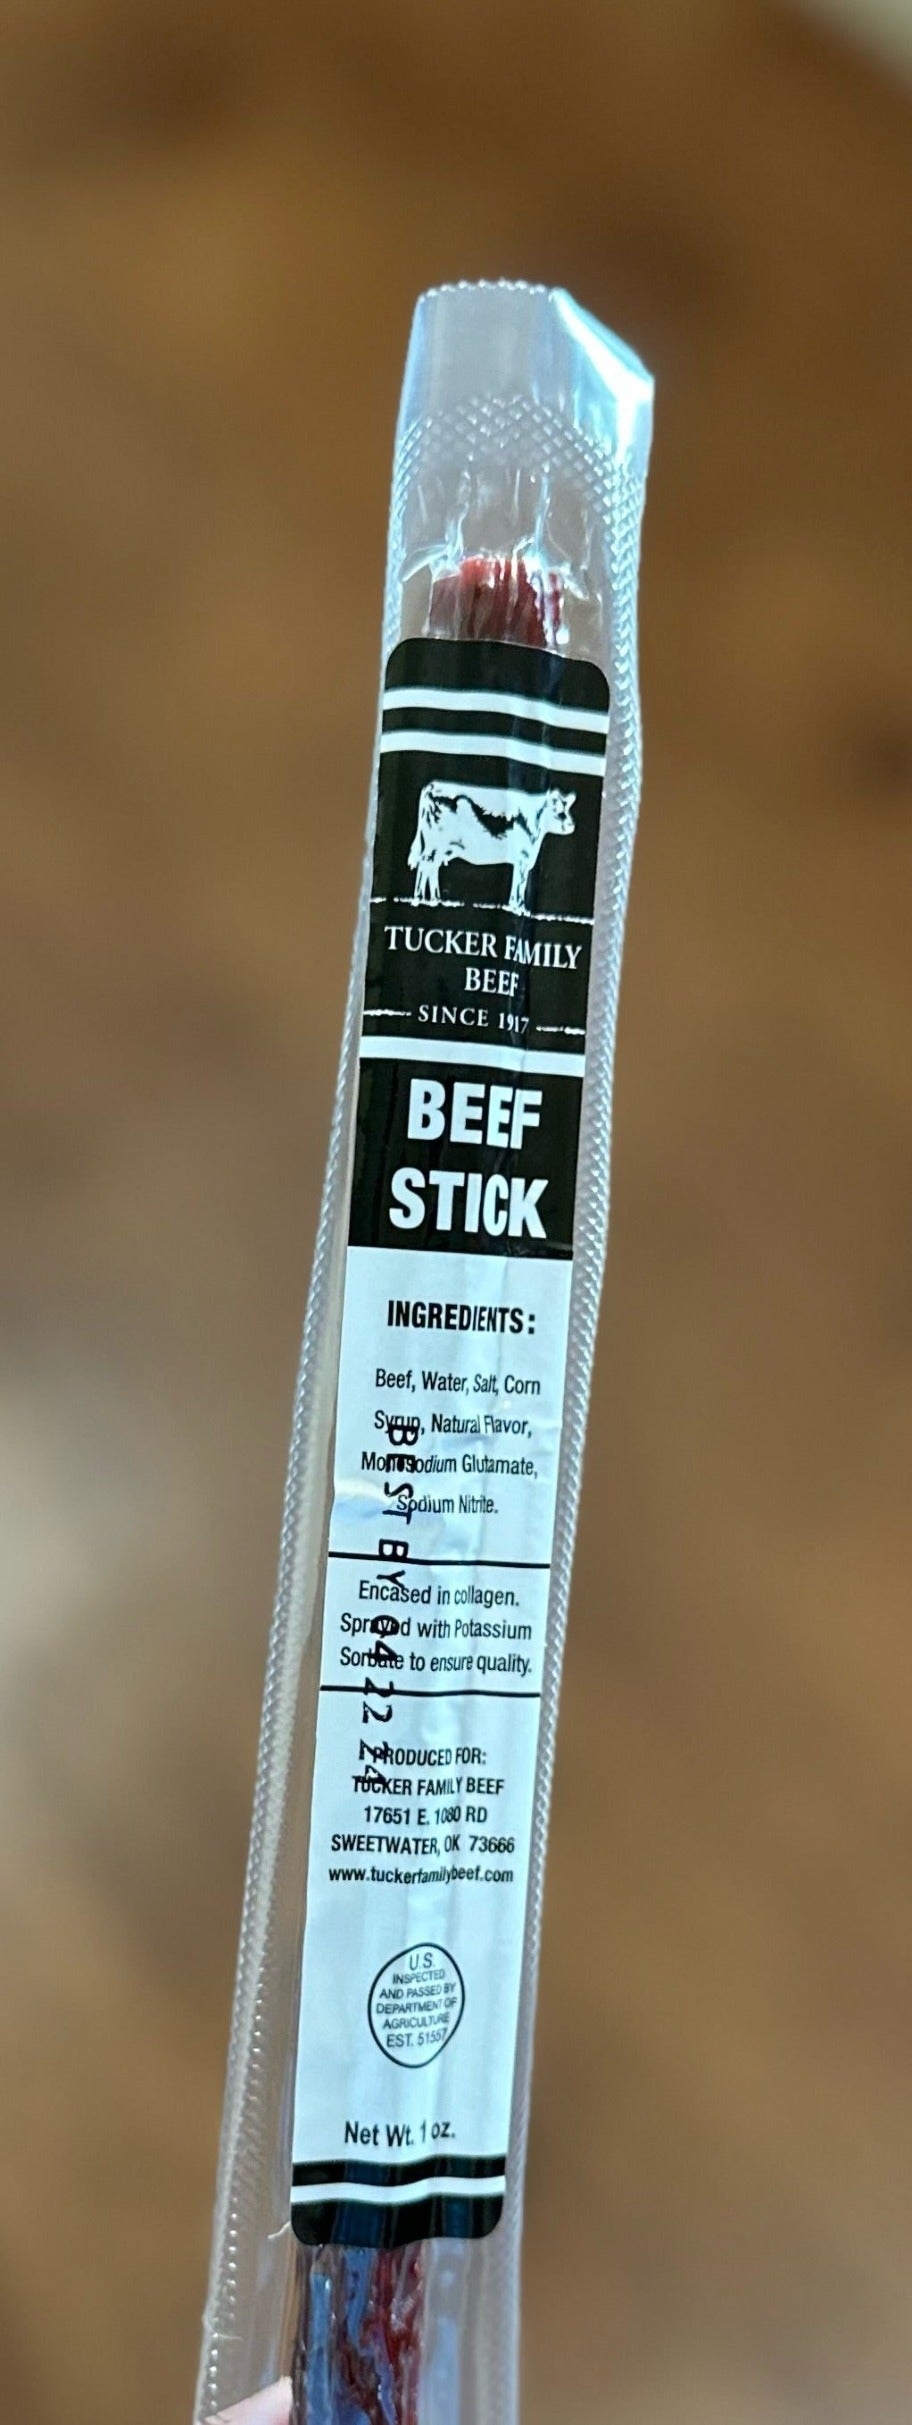 Tucker Family Beef - Original Beef Sticks - 20-stick pack